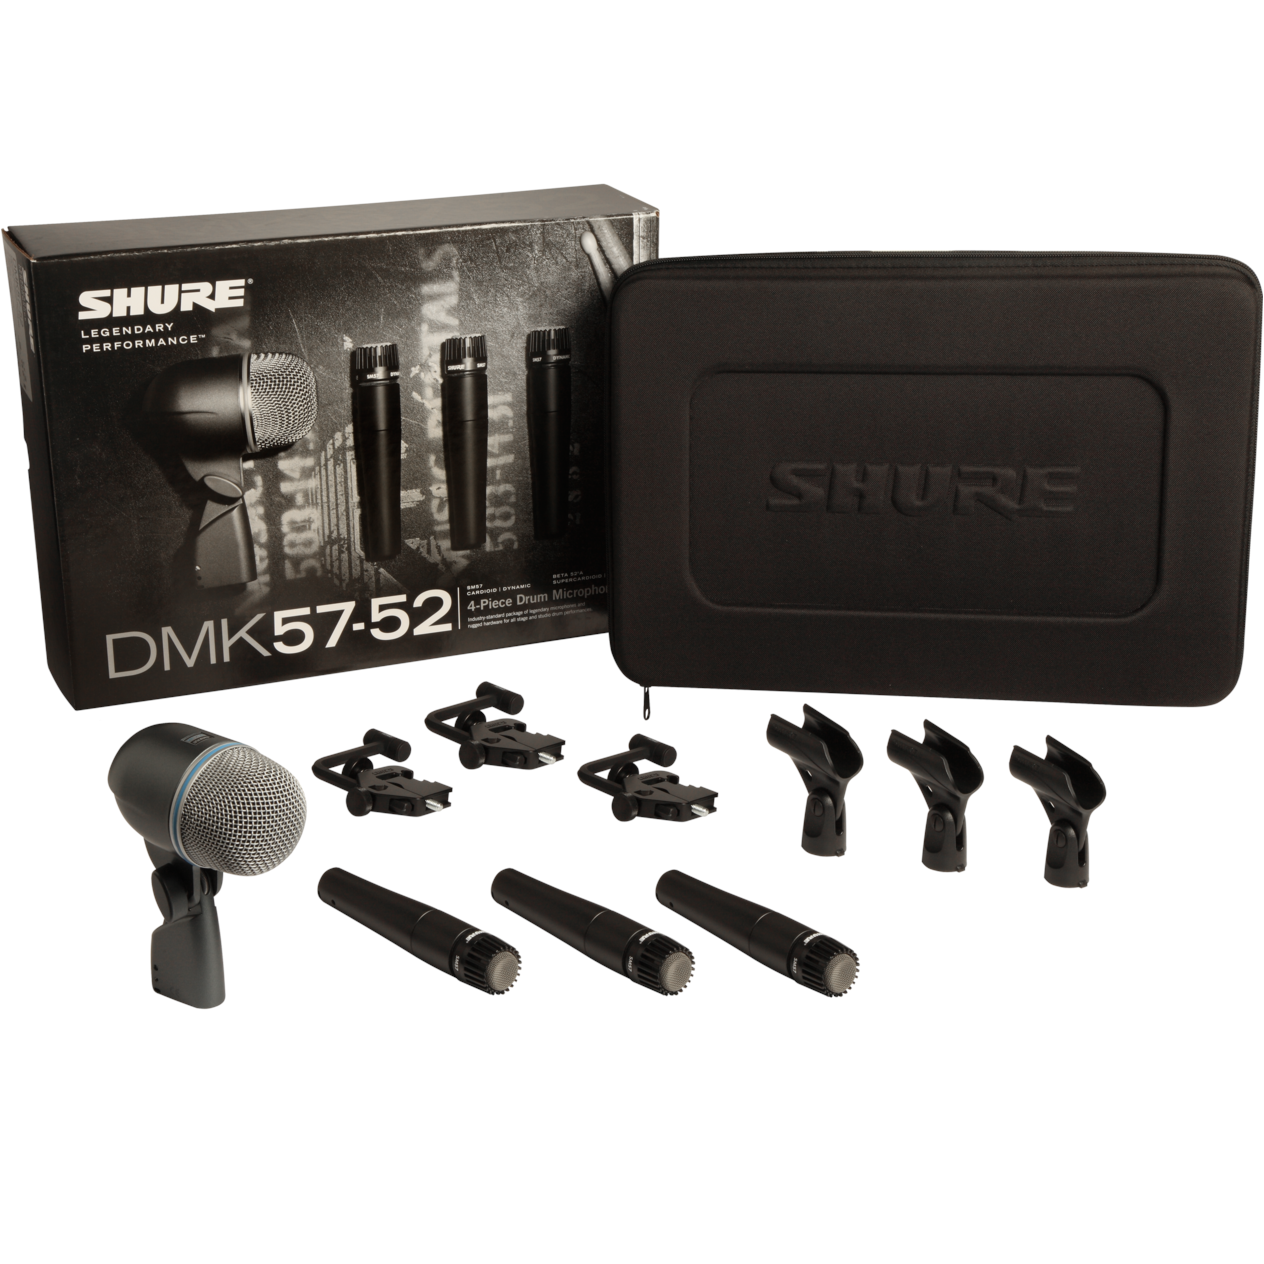 Shure DMK57-52 Drum Microphone Kit - New